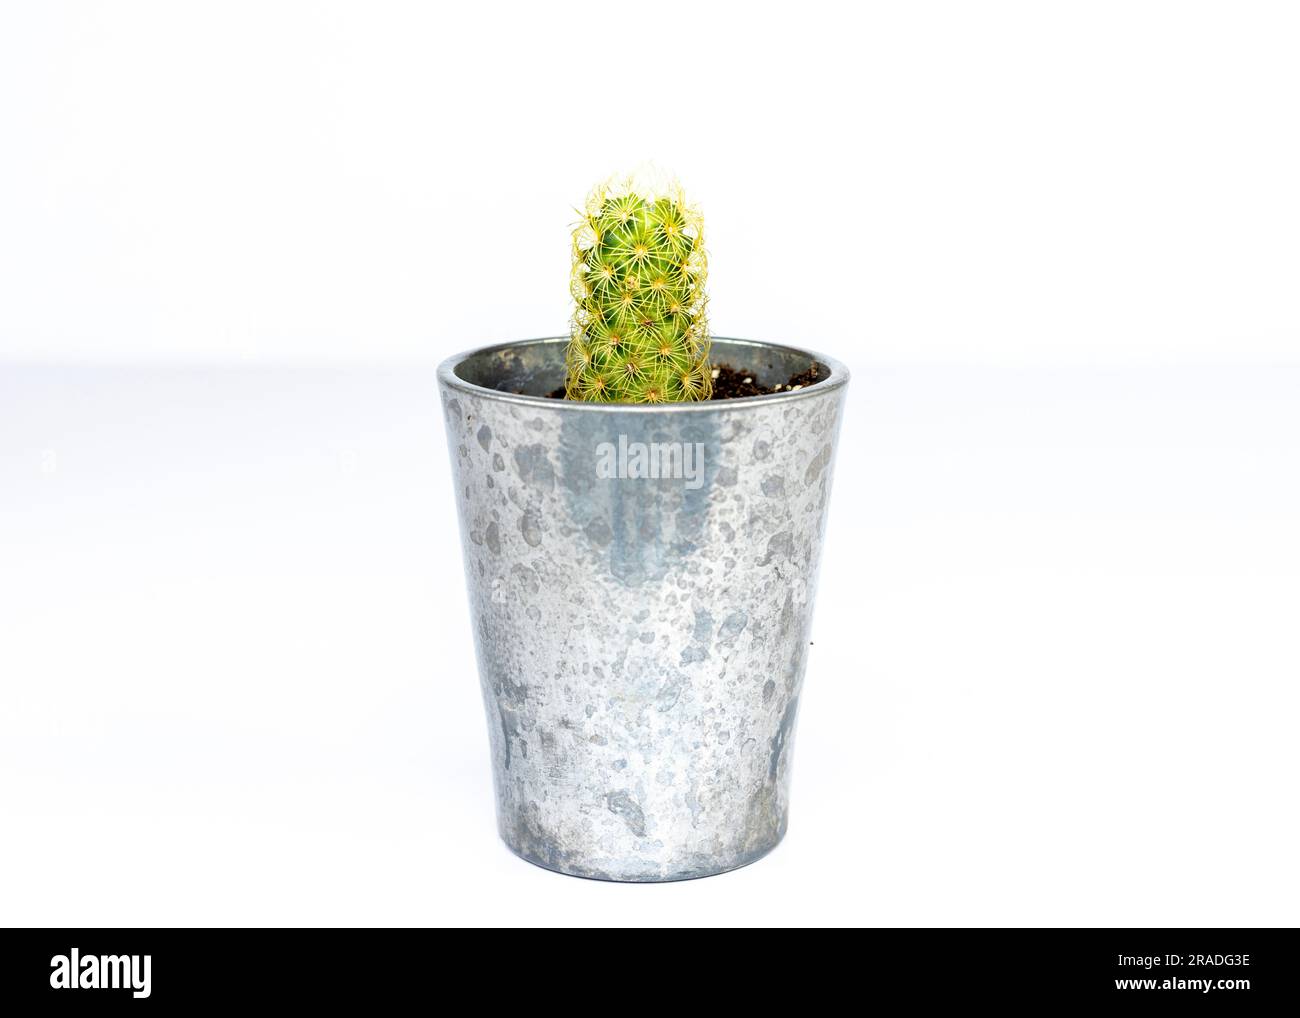 Gold lace mammillaria elongata cactus in a small decorative pot on white background Stock Photo